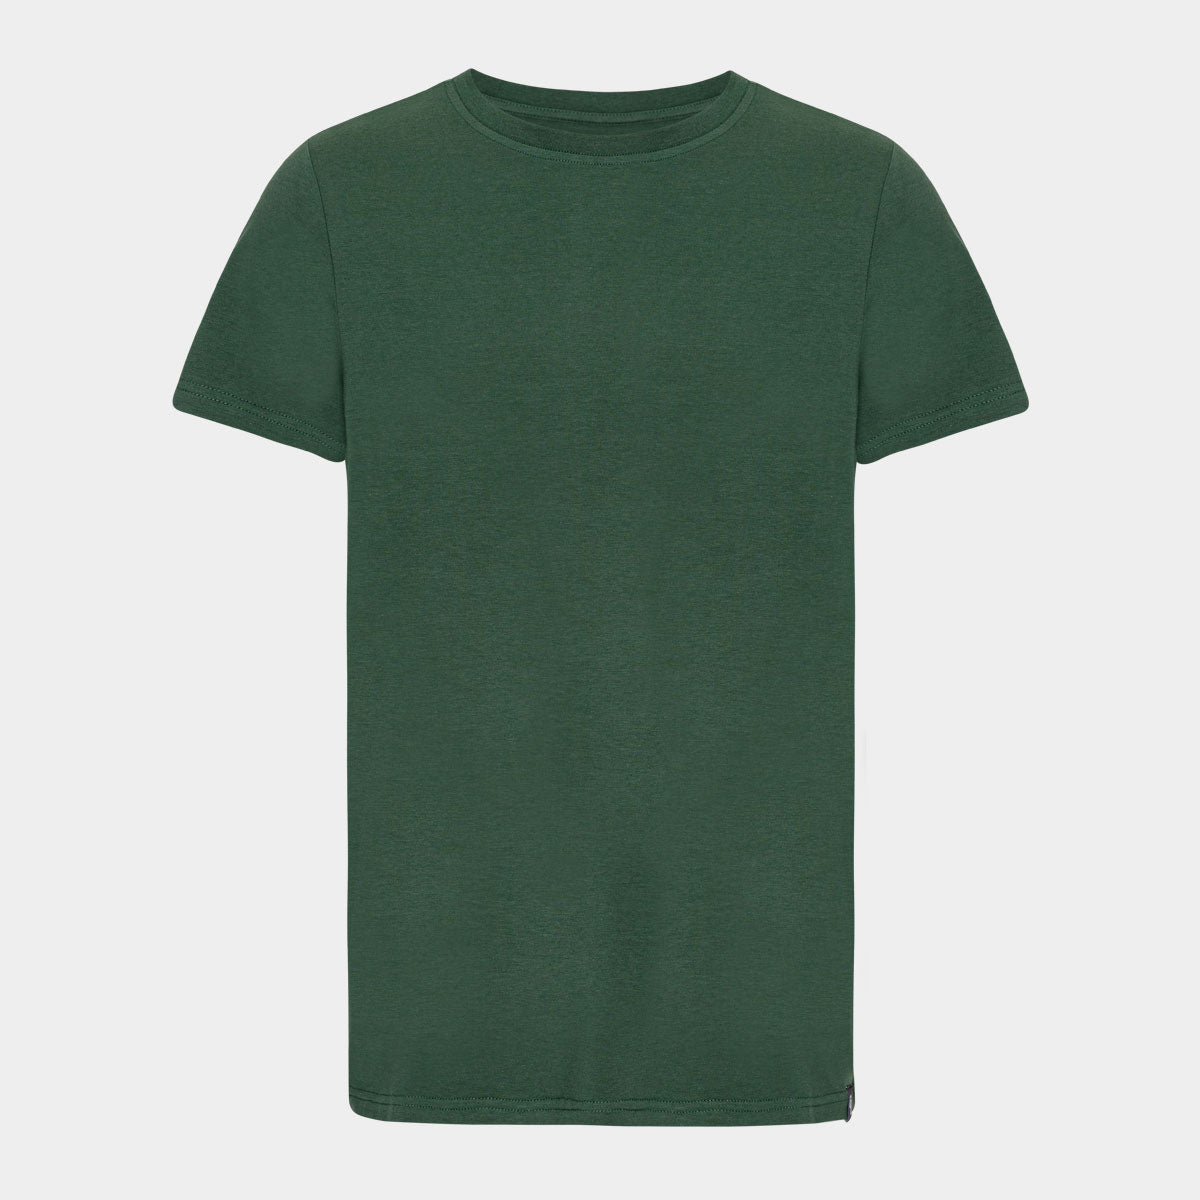 Se Mørkegrøn bambus T-shirt med crew neck til mænd fra Copenhagen Bamboo, M hos Bambustøj.dk